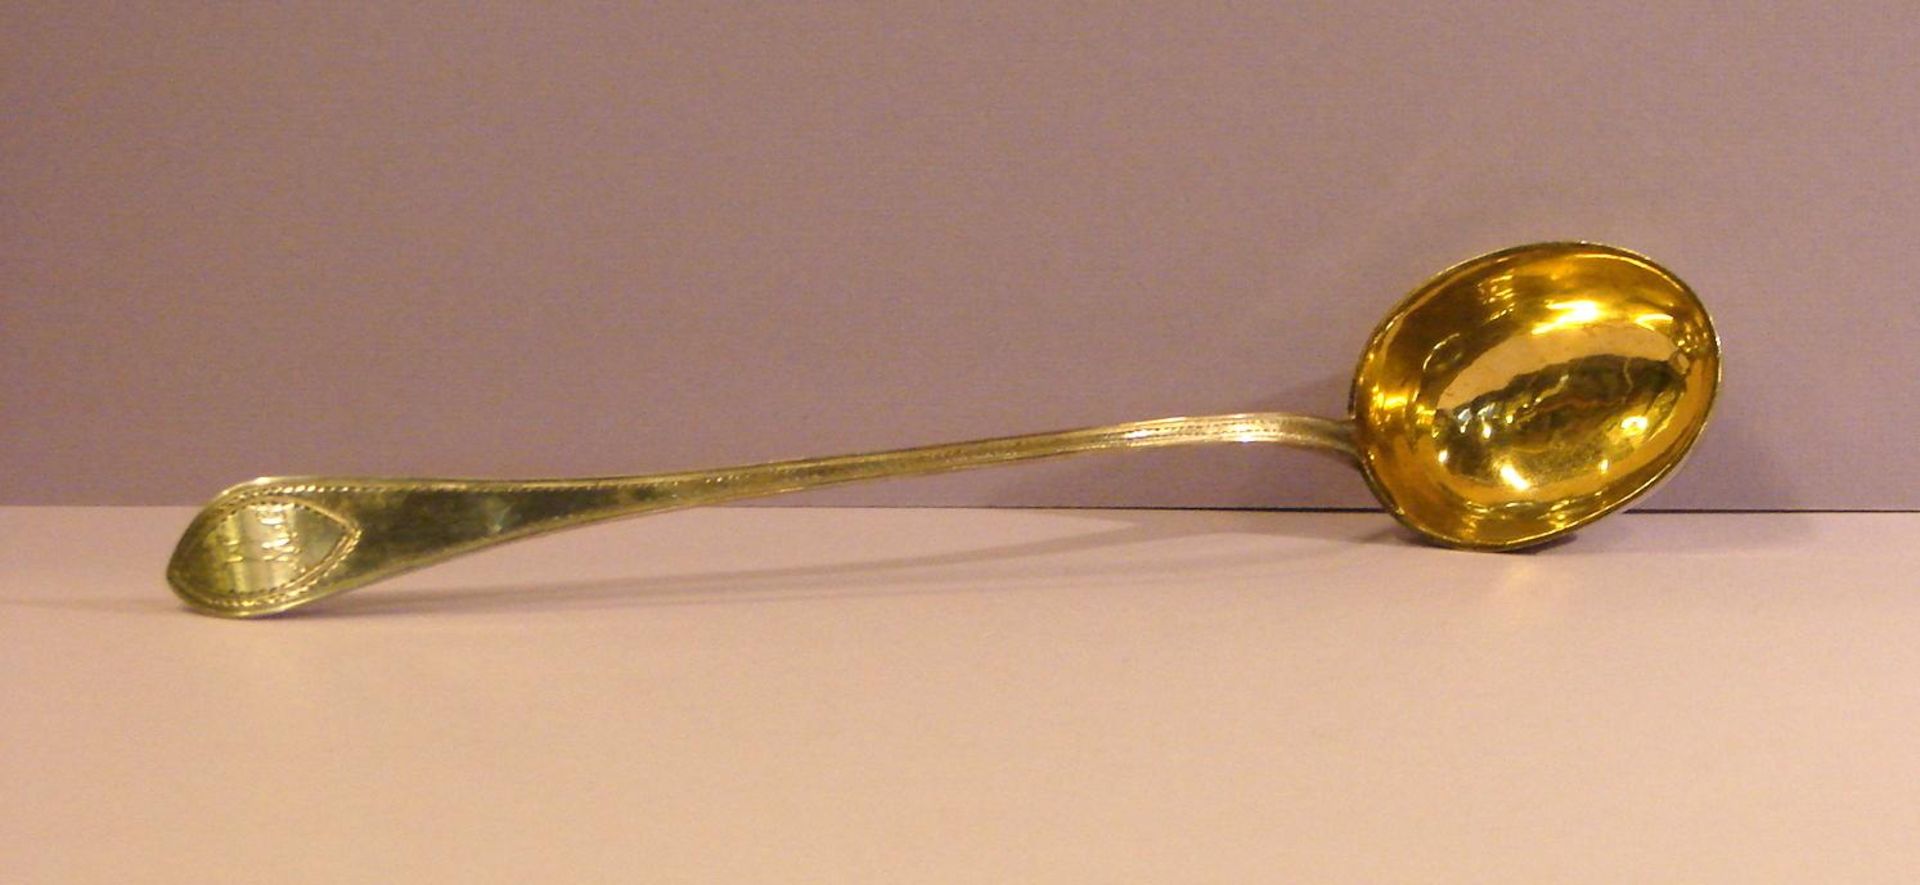 Suppenkelle, gross, innen vergoldet, Trimmulierstrich, um 1800, Silber, ca. 246 gr.,Norddeutsch,